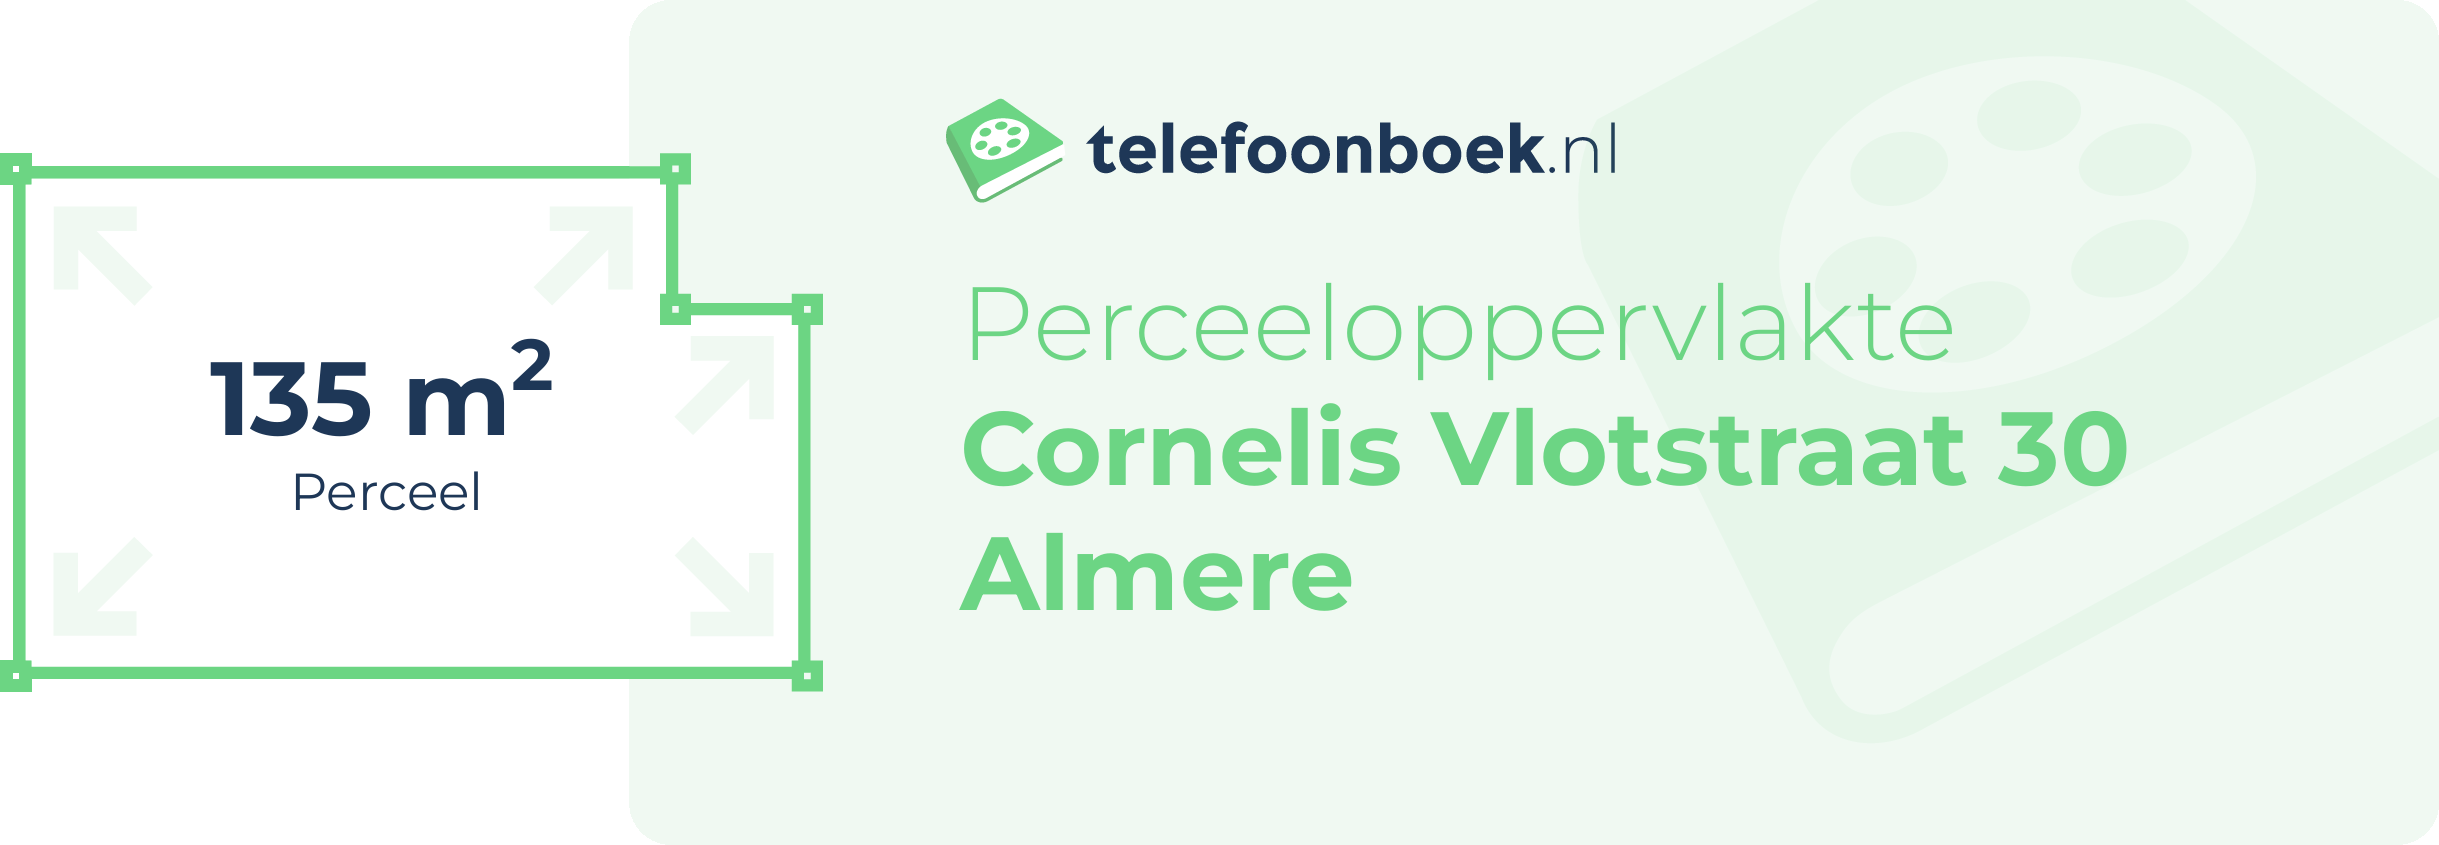 Perceeloppervlakte Cornelis Vlotstraat 30 Almere